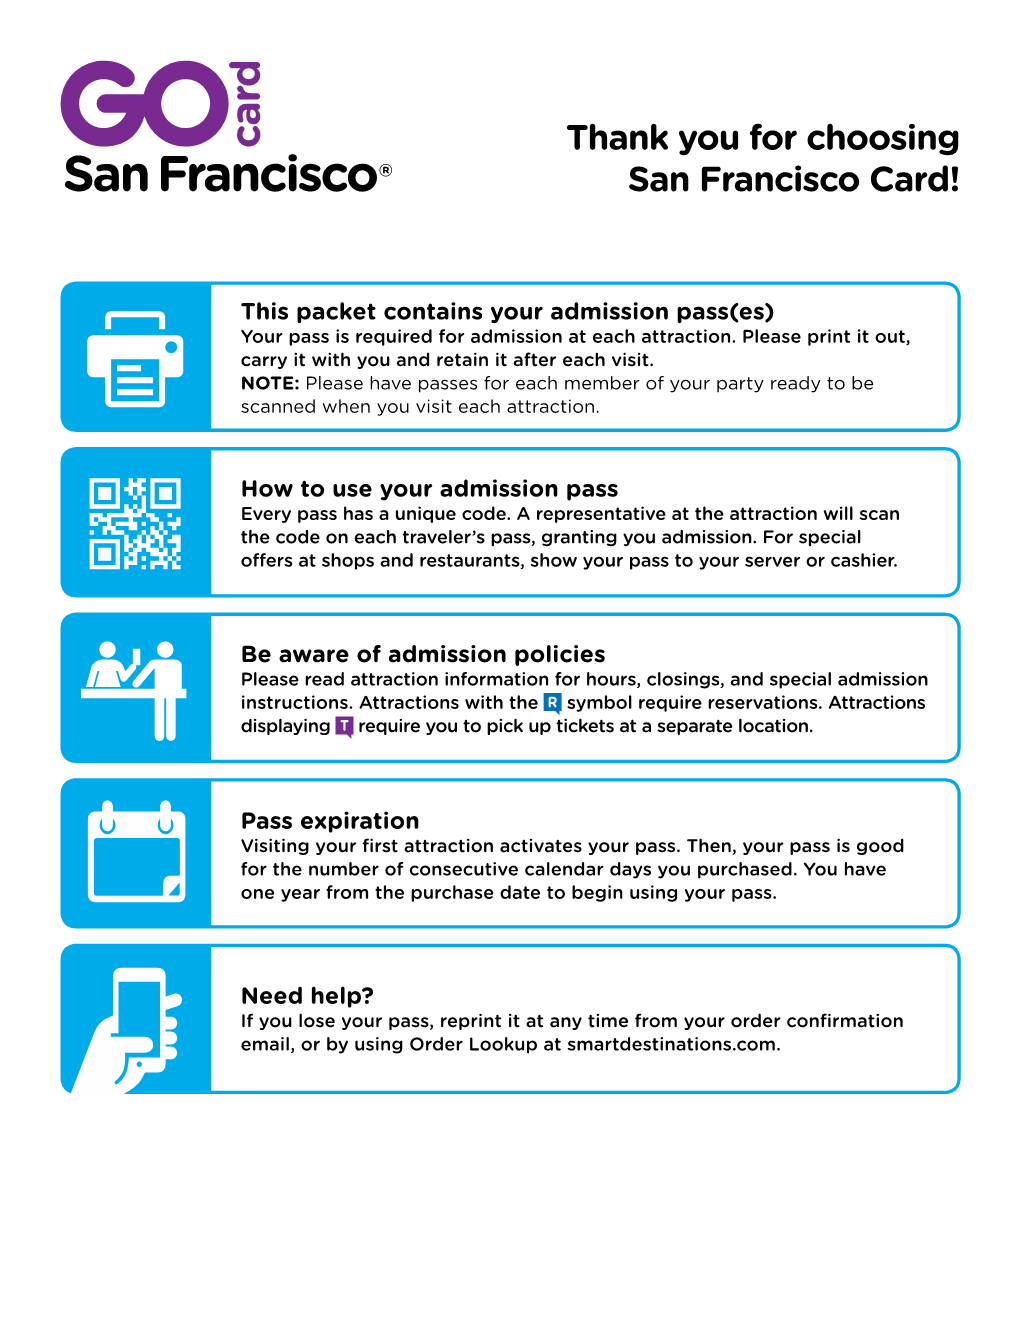 Thank You for Choosing San Francisco Card!